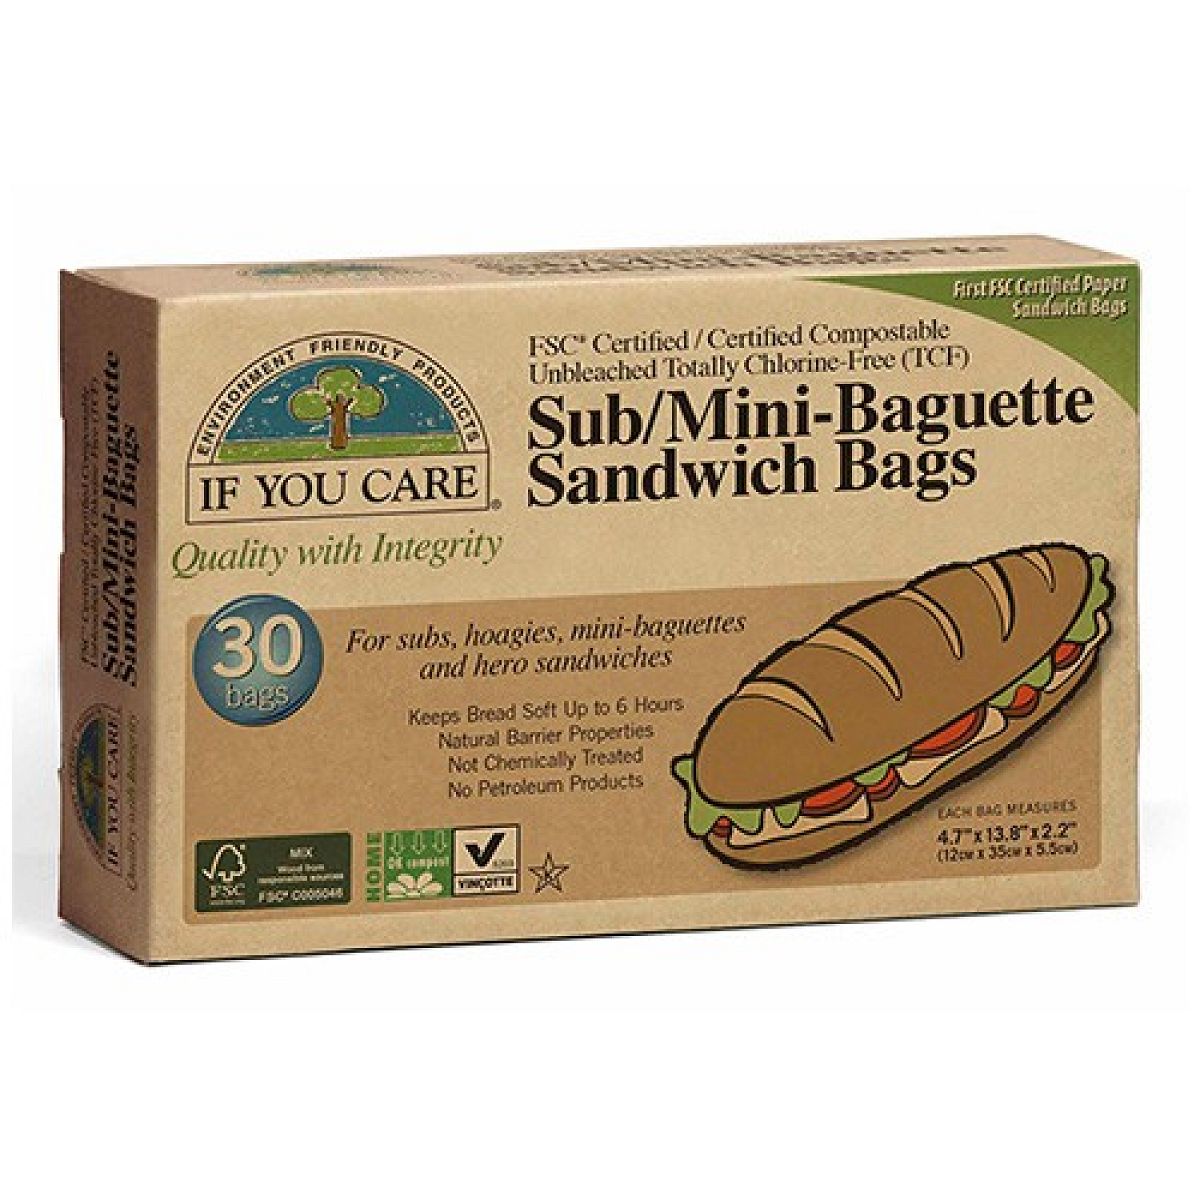 If you care - Sub/mini-baguette sandwich 30 bags